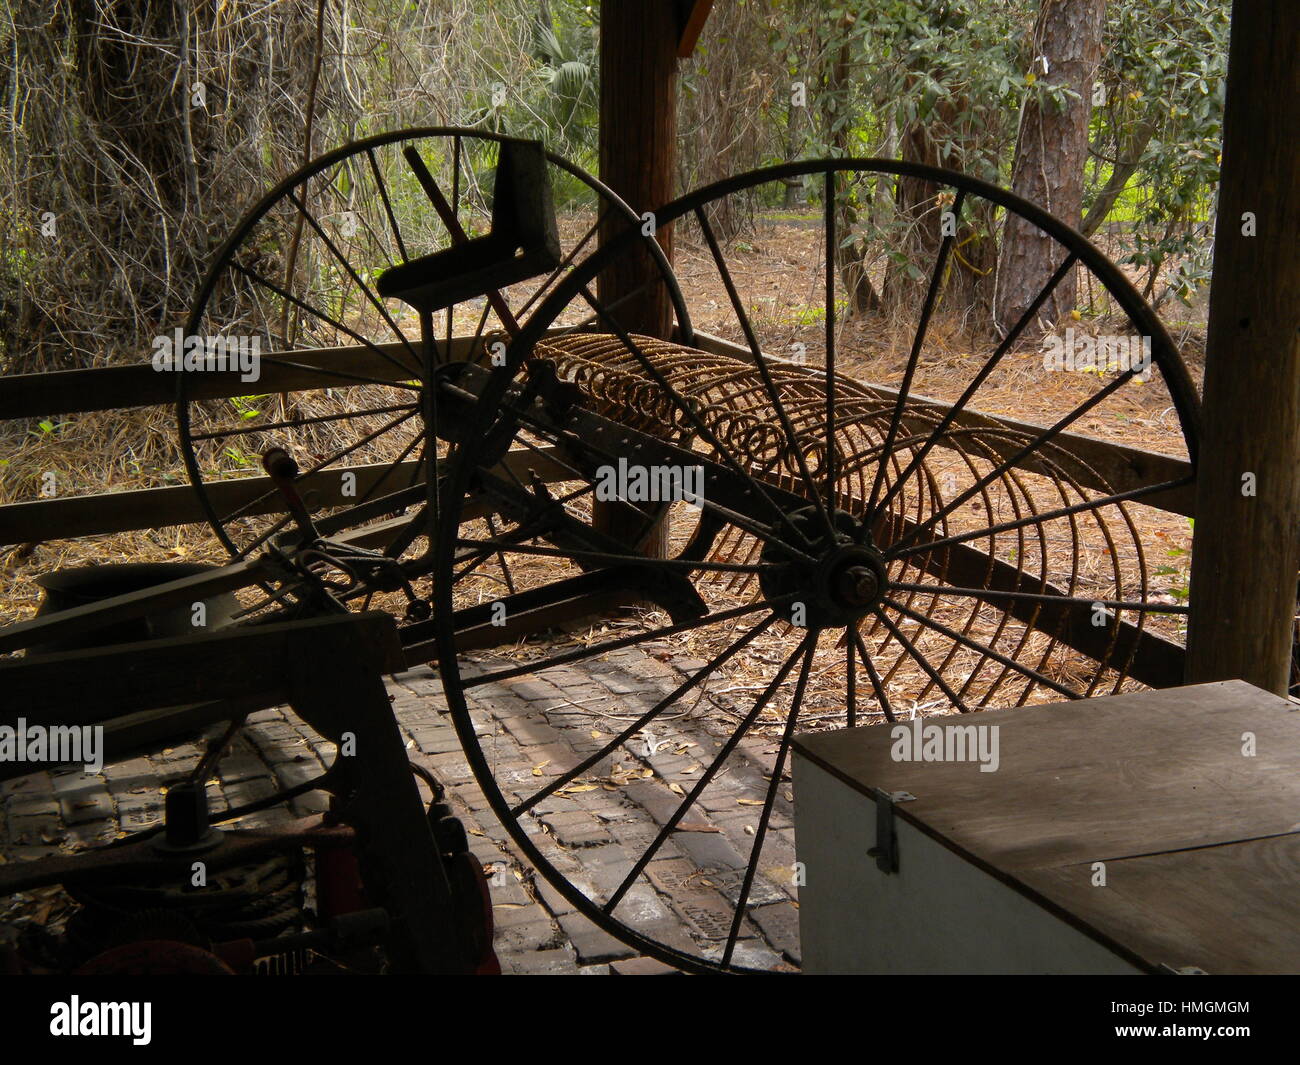 Seeing a antique horse drawn hay rake can make you nostalgic about  farm life long ago. Stock Photo